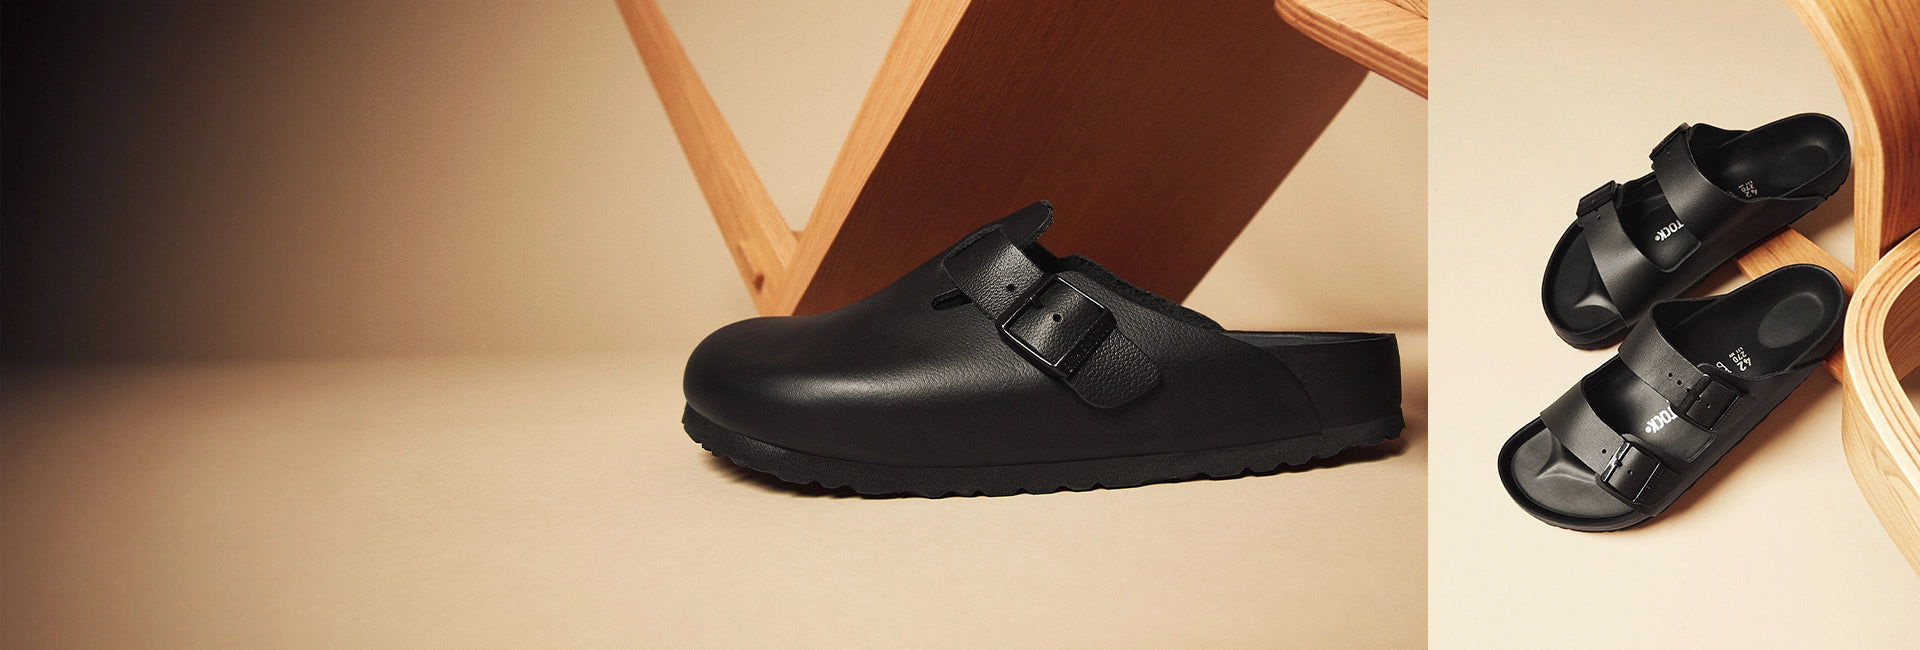 Birkenstock NZ Official Distributor - Birk Sandals, Shoes & Clogs